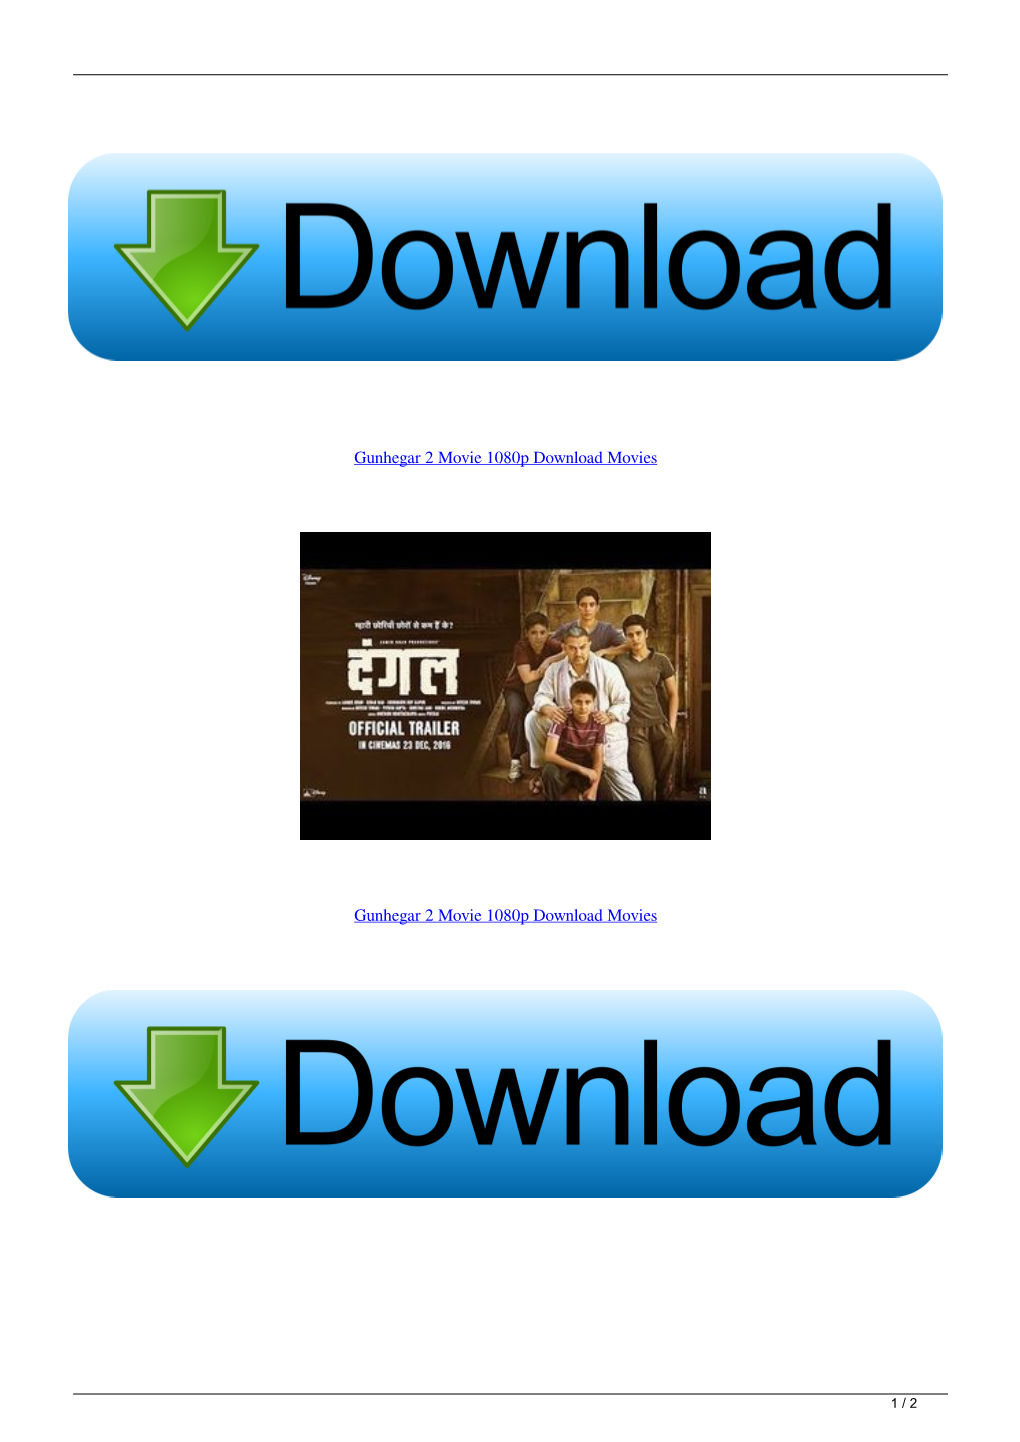 Gunhegar 2 Movie 1080P Download Movies